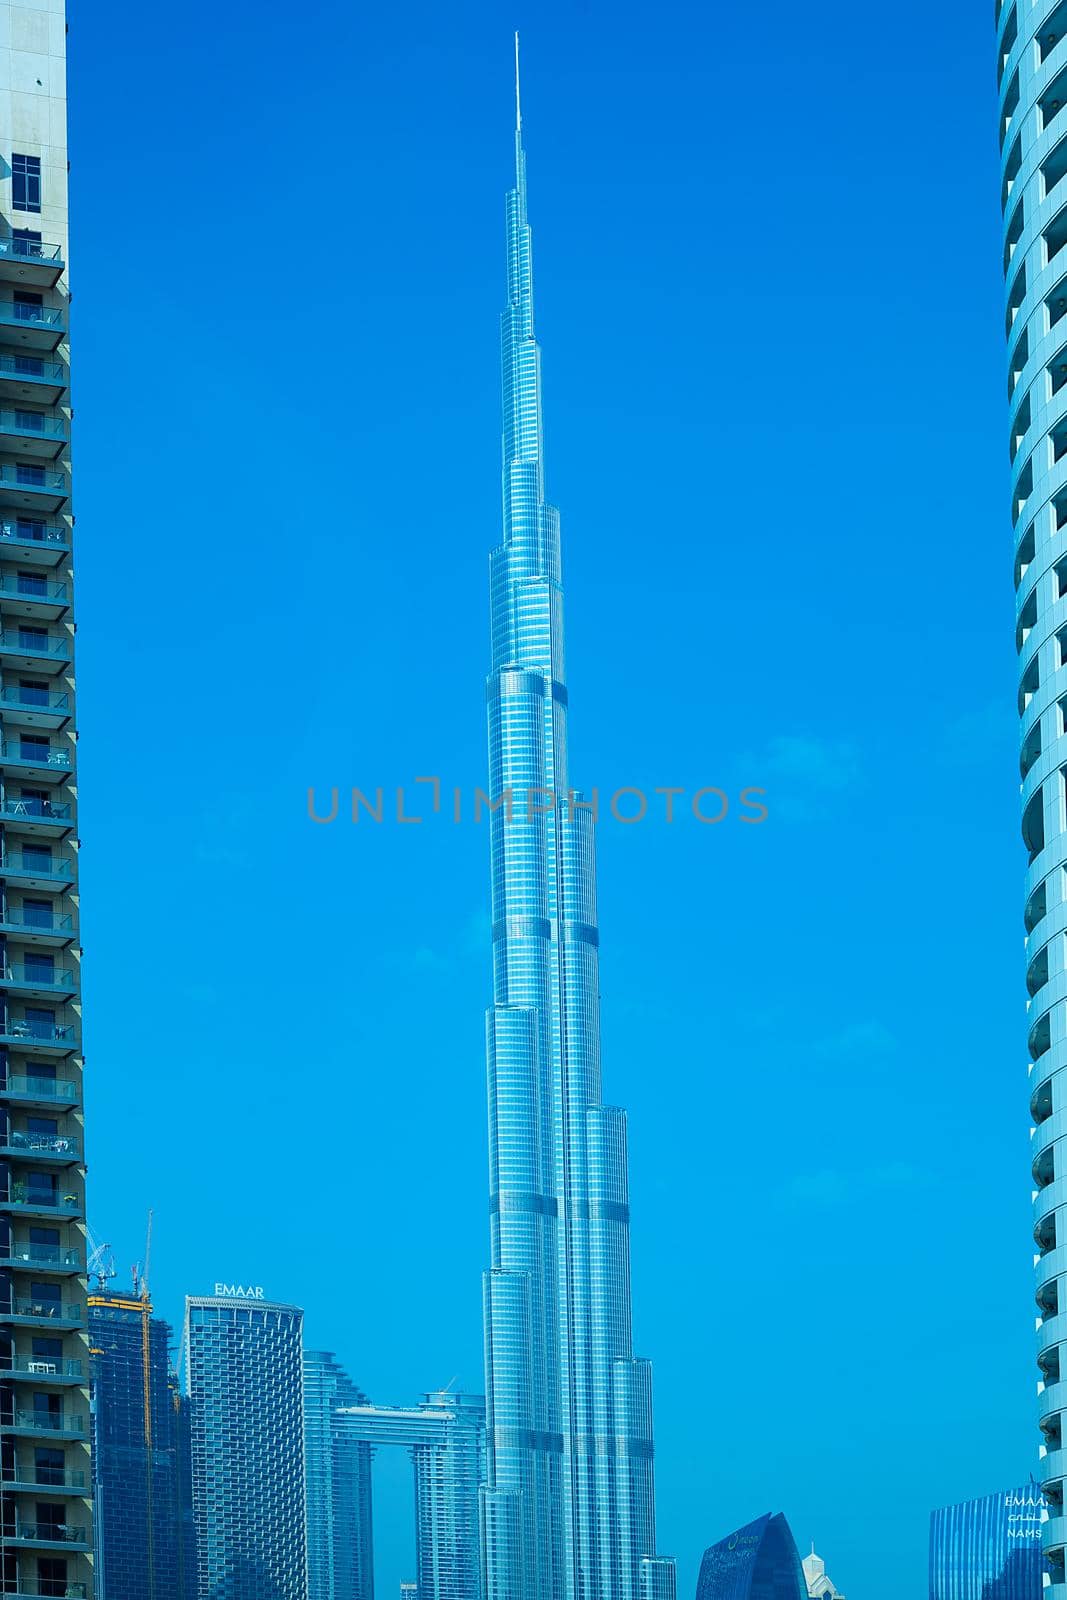 Dubai/OAE - 01 05 2020: Day Downtown View